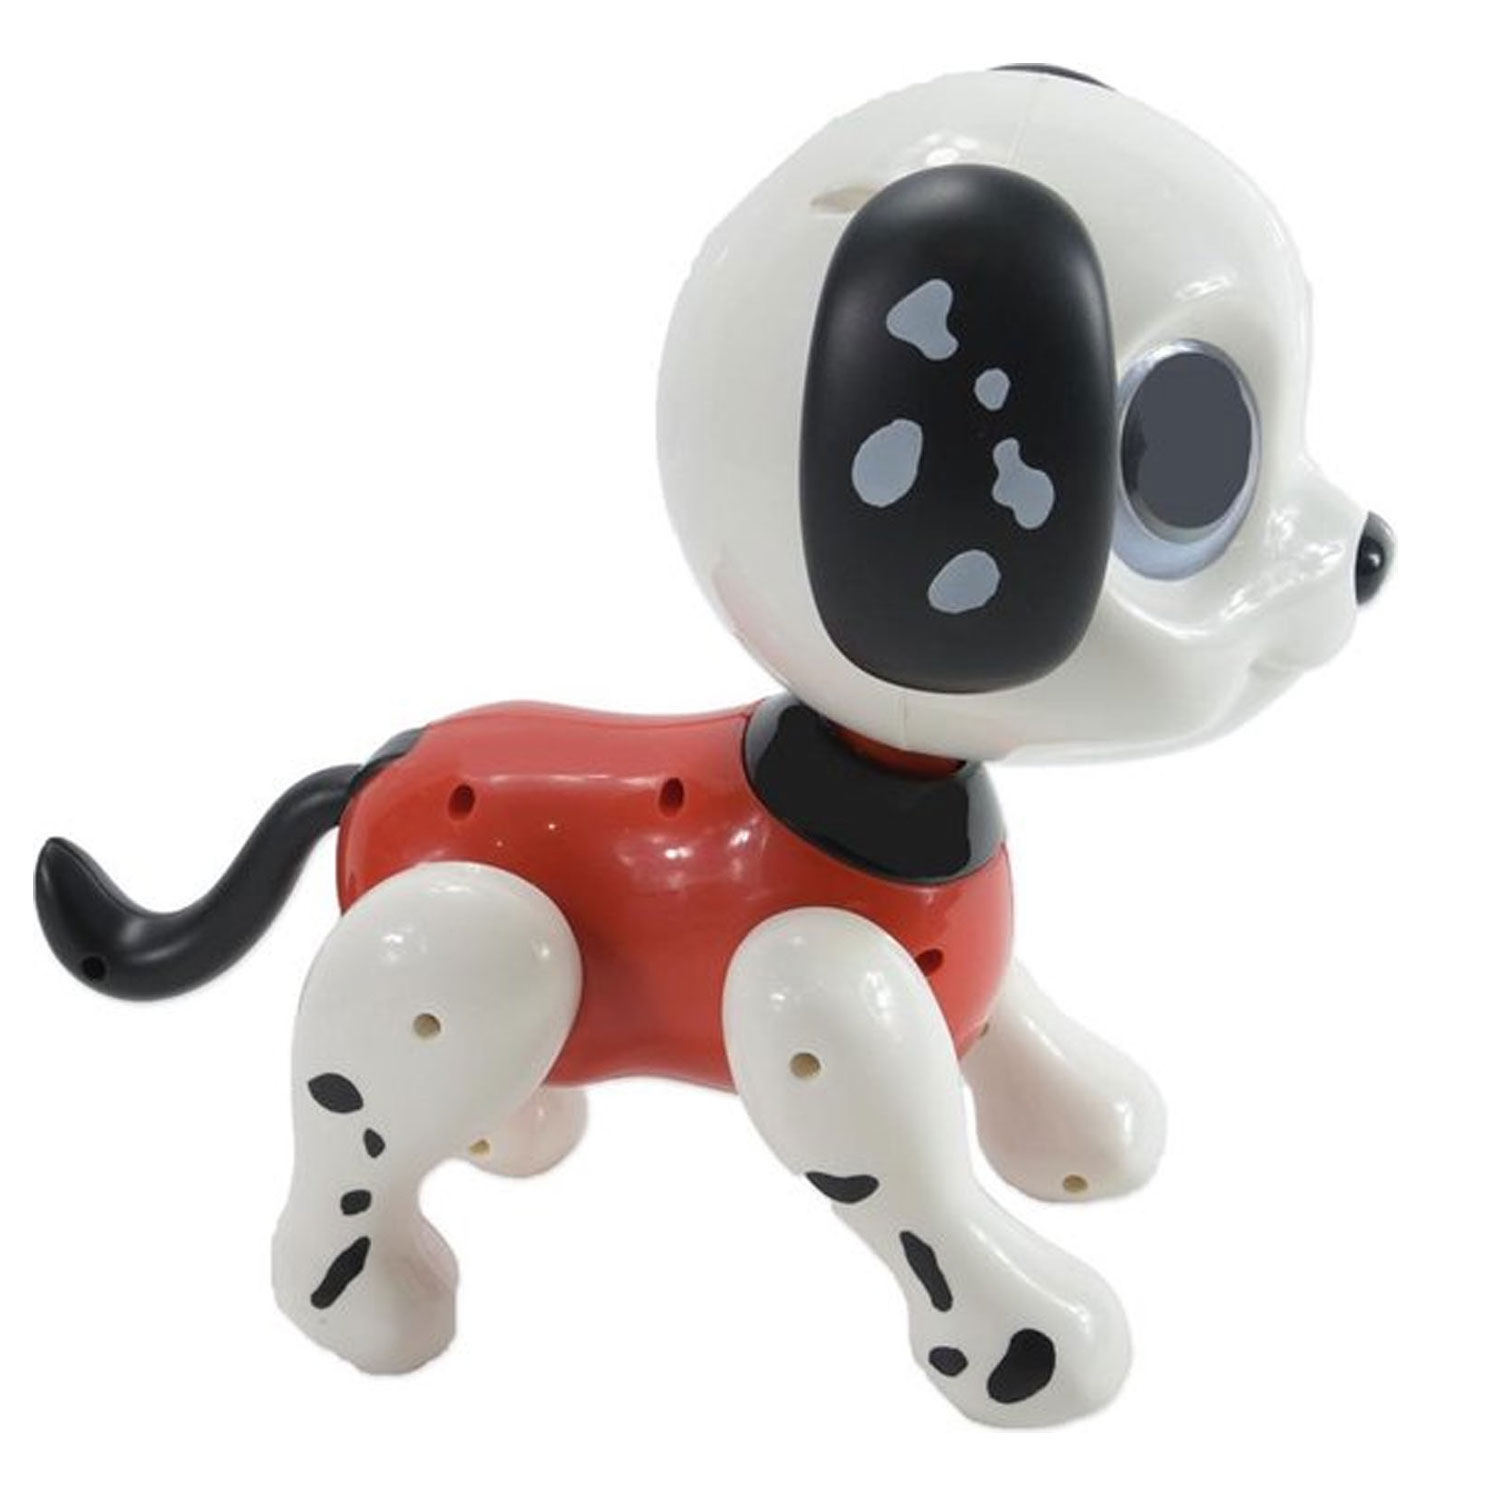 Gear2Play Robo Smart Puppy